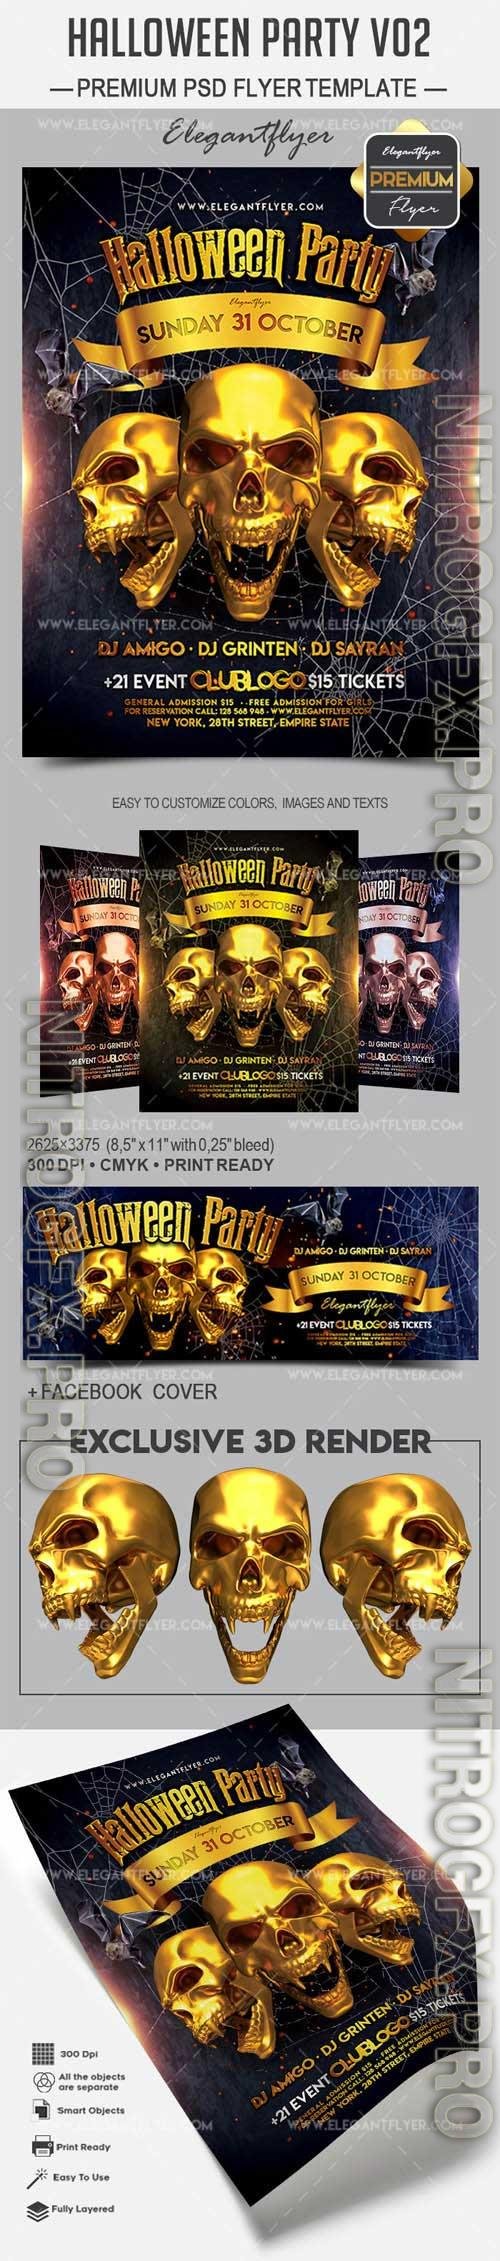 Halloween Party Flyer PSD Template vol 4